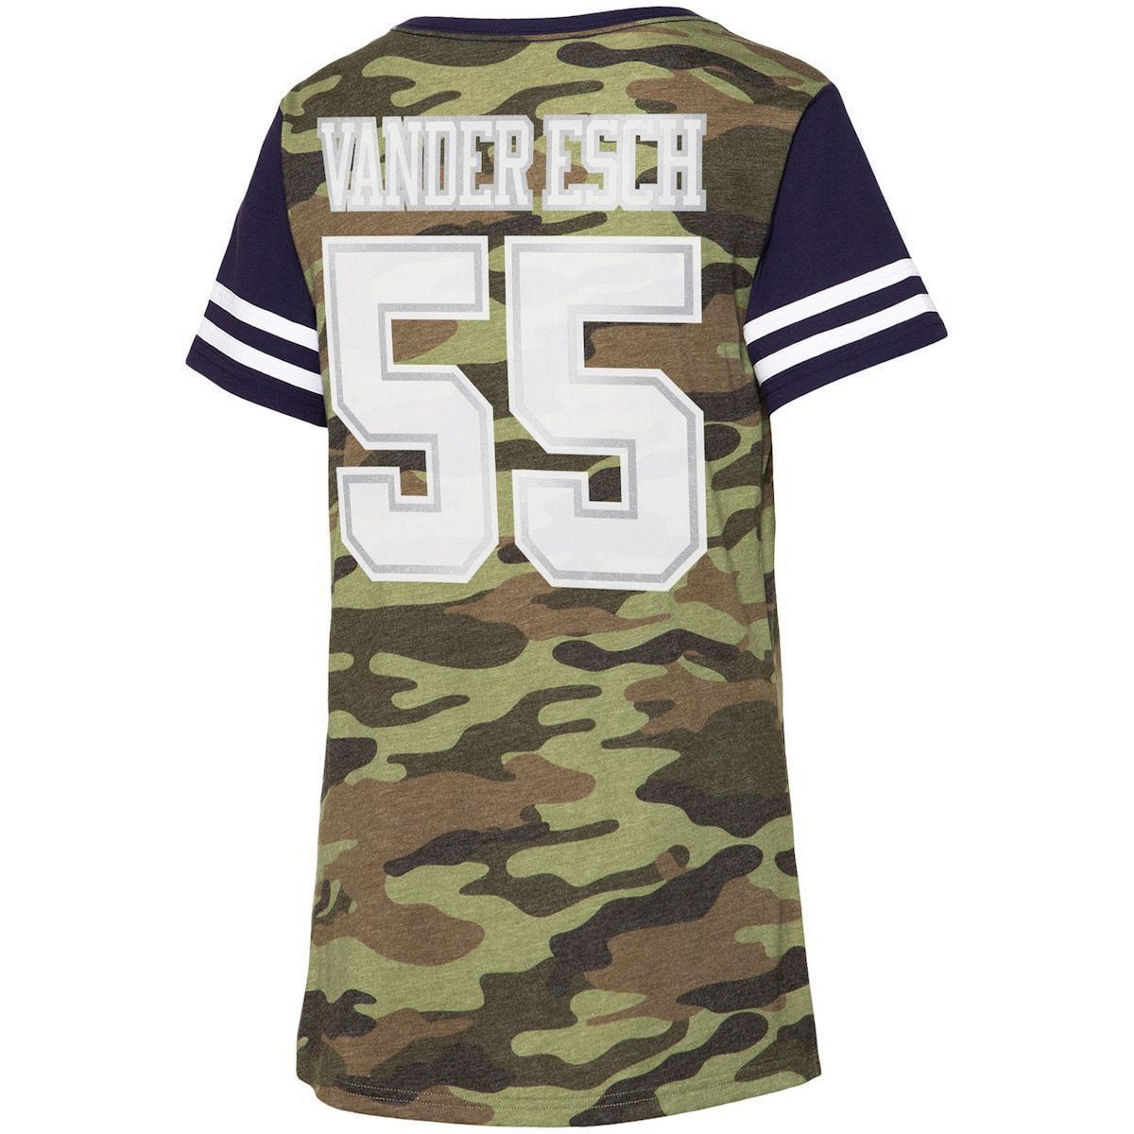 Dallas Cowboys Merchandise Women's Leighton Vander Esch Camo/Navy Dallas Cowboys Simone Name & Number V-Neck Tri-Blend T-Shirt - Image 4 of 4